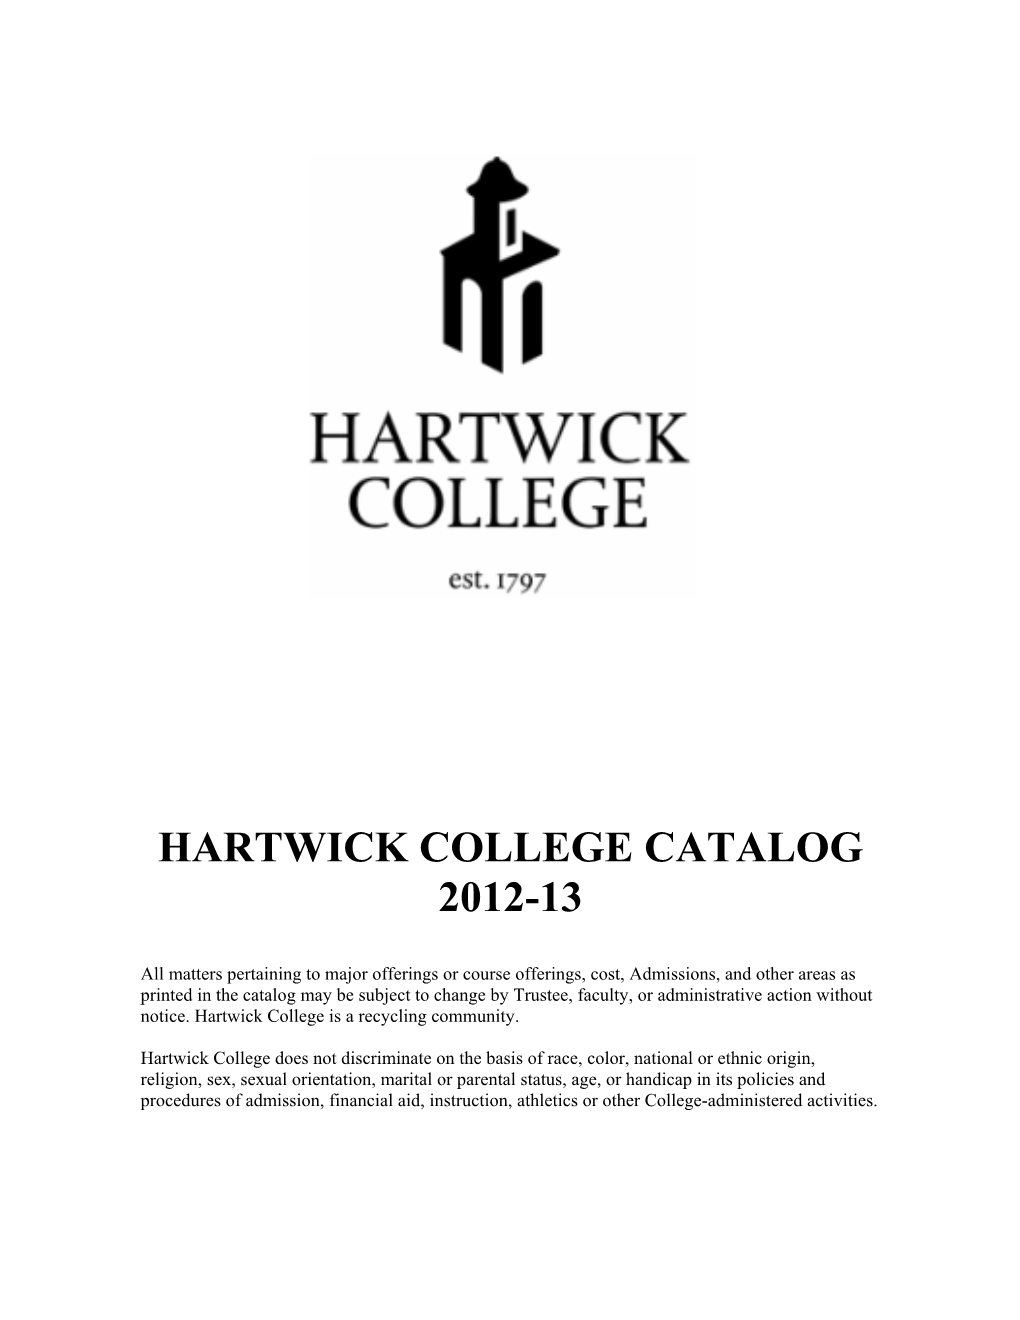 Hartwick College Catalog 2012-13